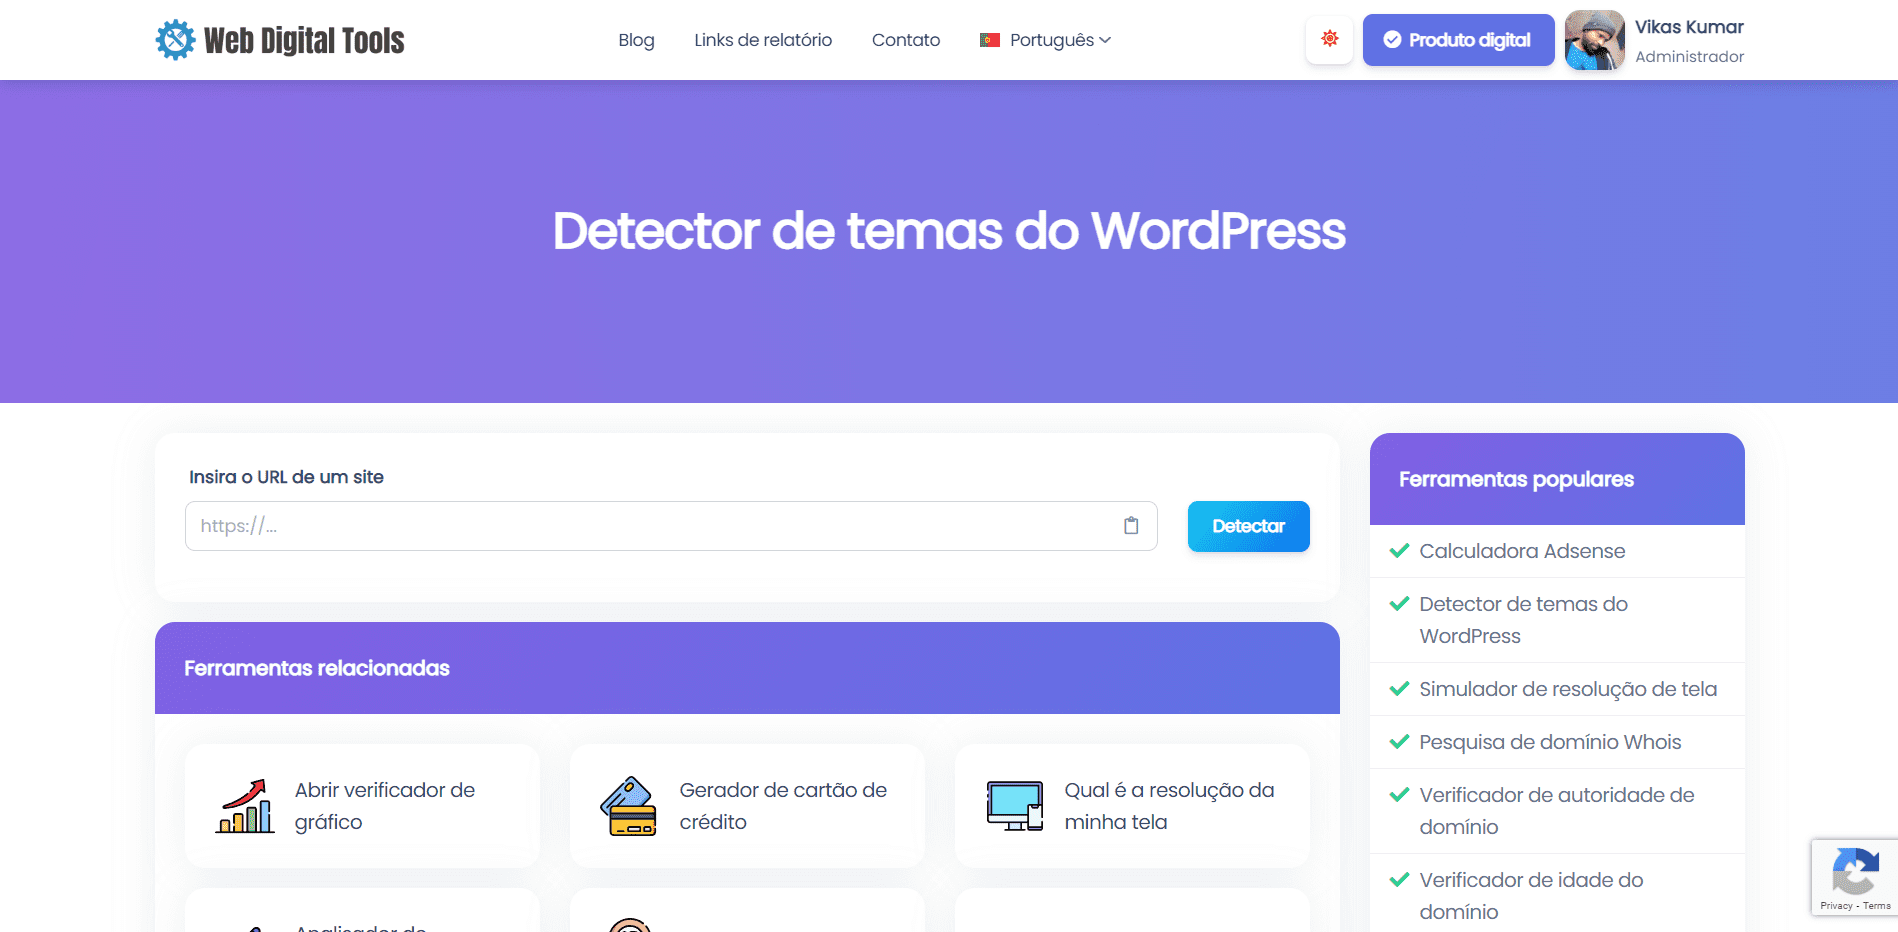 Detector de temas do WordPress